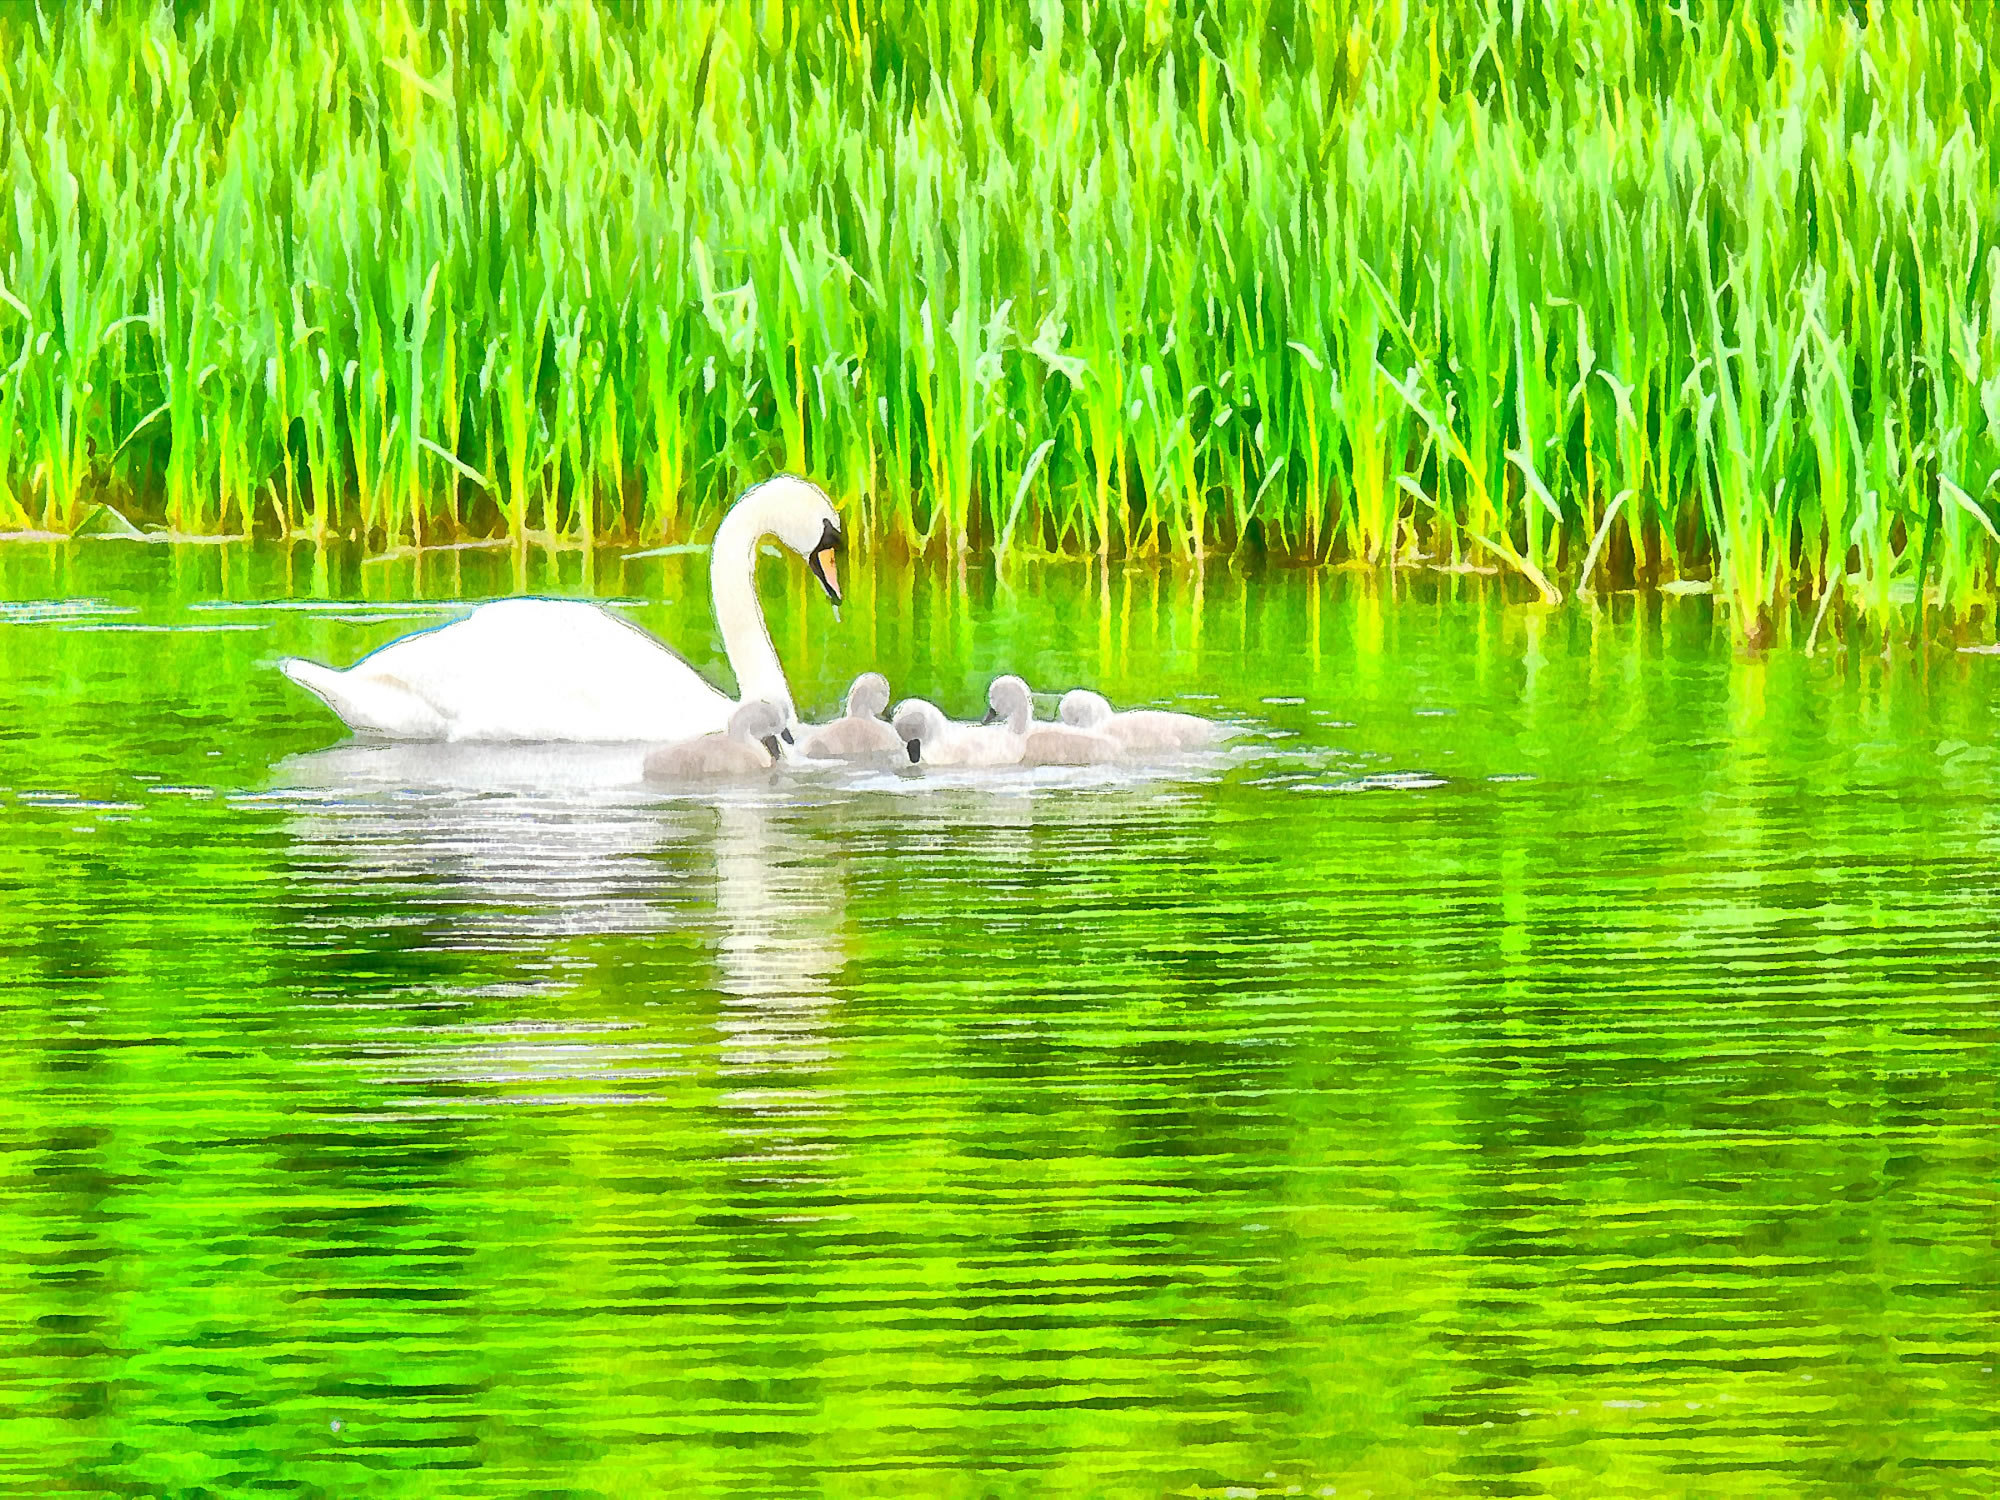 Swan art picture 49 - art image 3